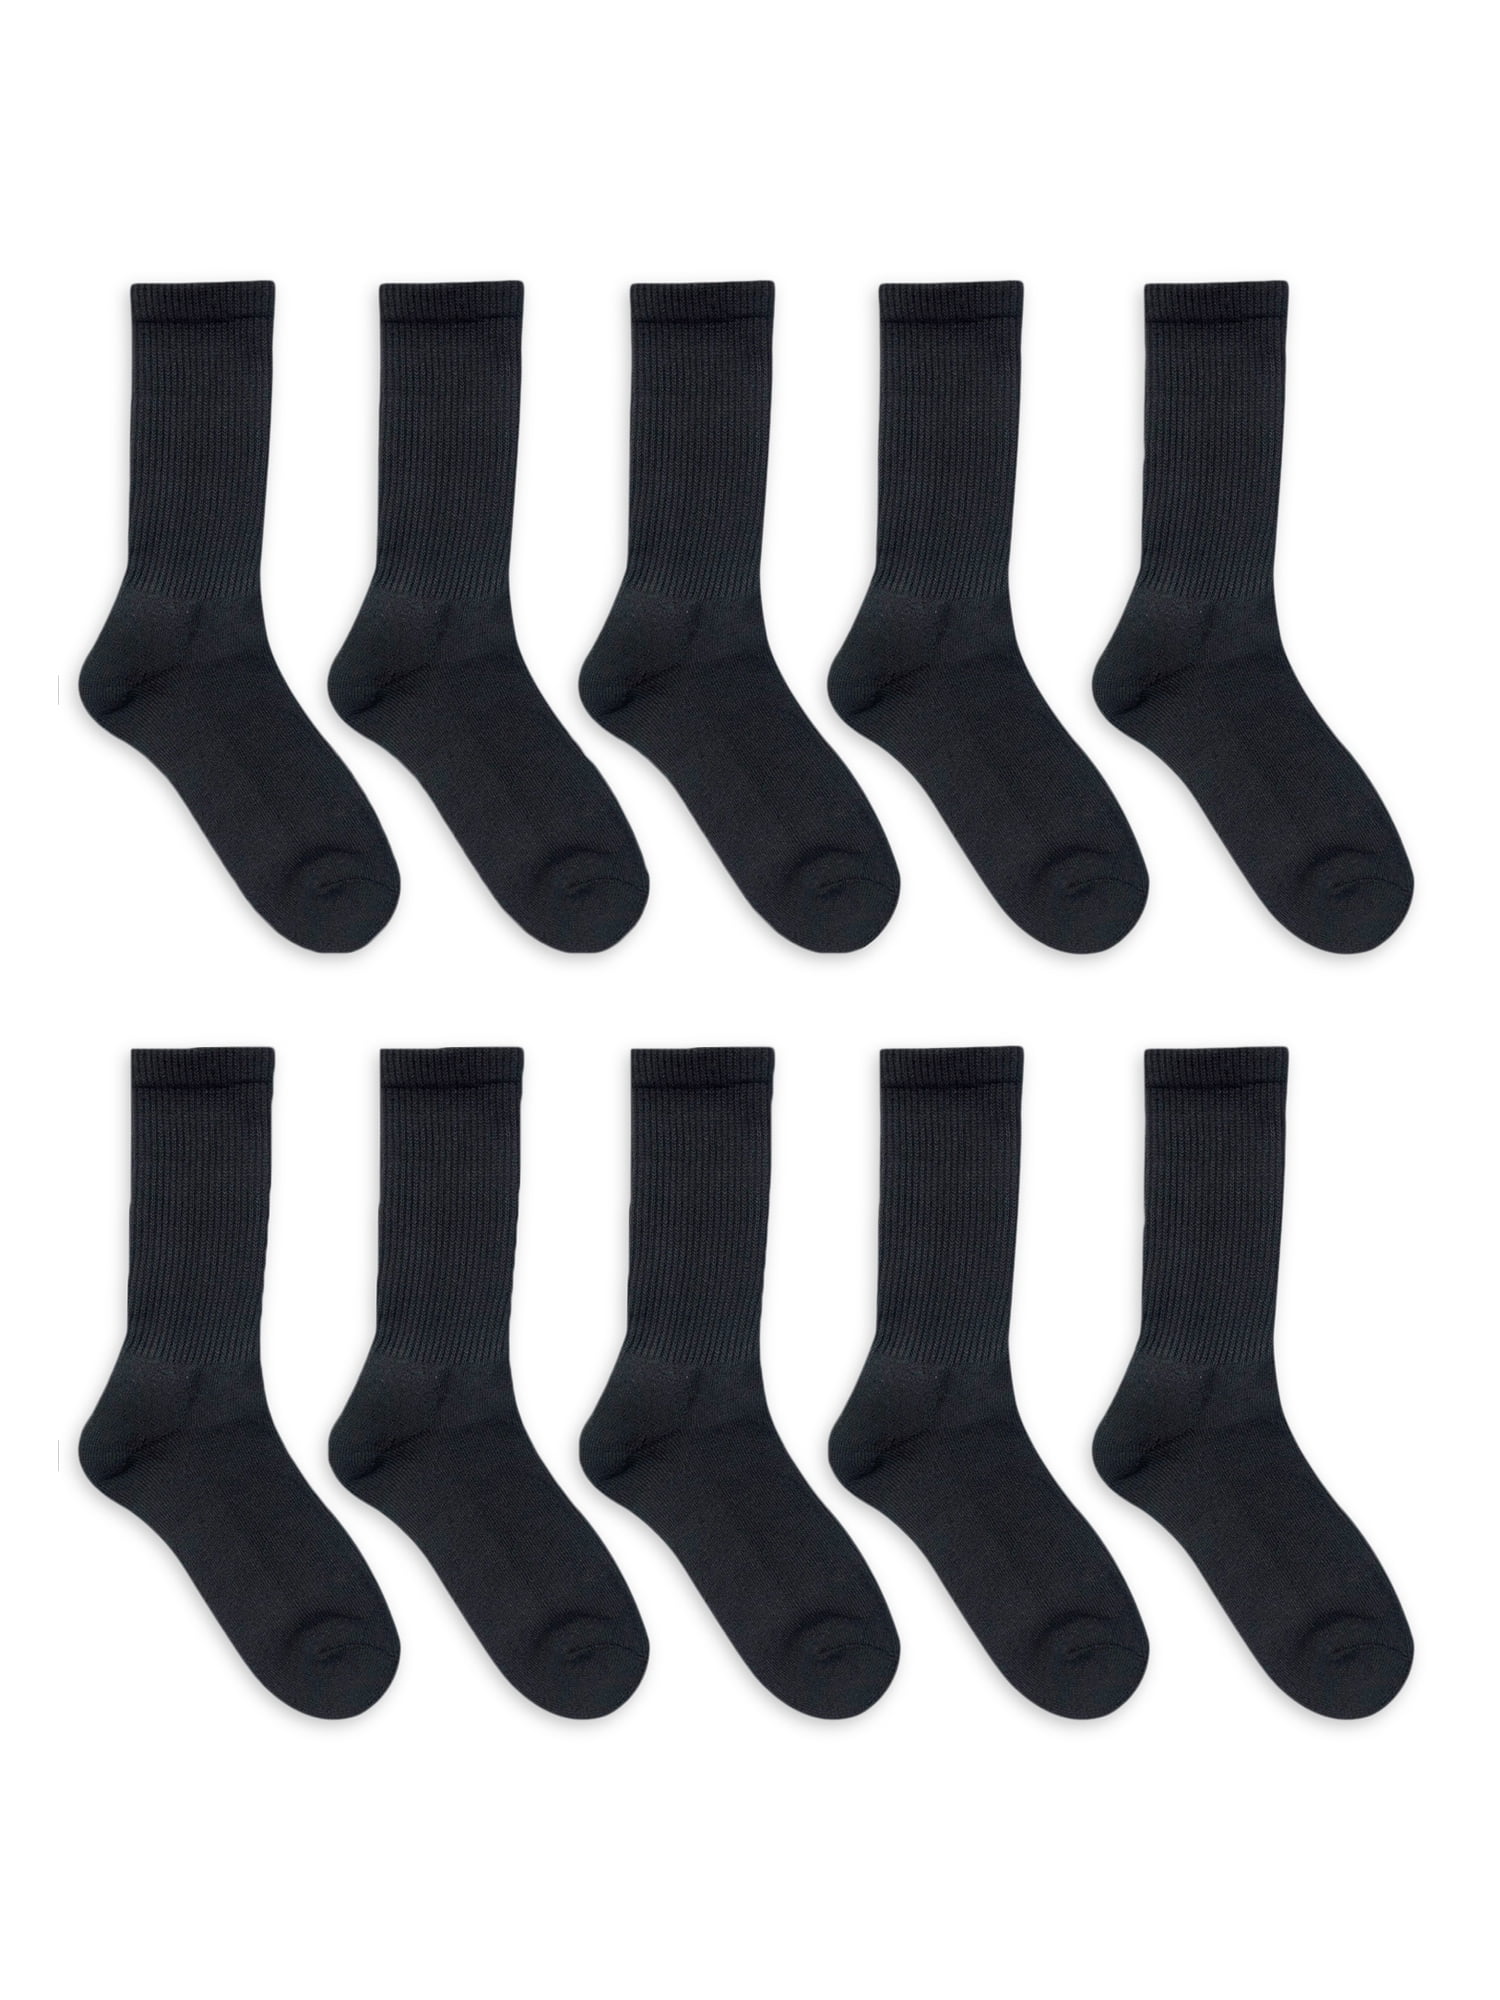 Black Size U.S 7-13    Fasoar Unisex Soccer Socks Details about   Soccer Socks 